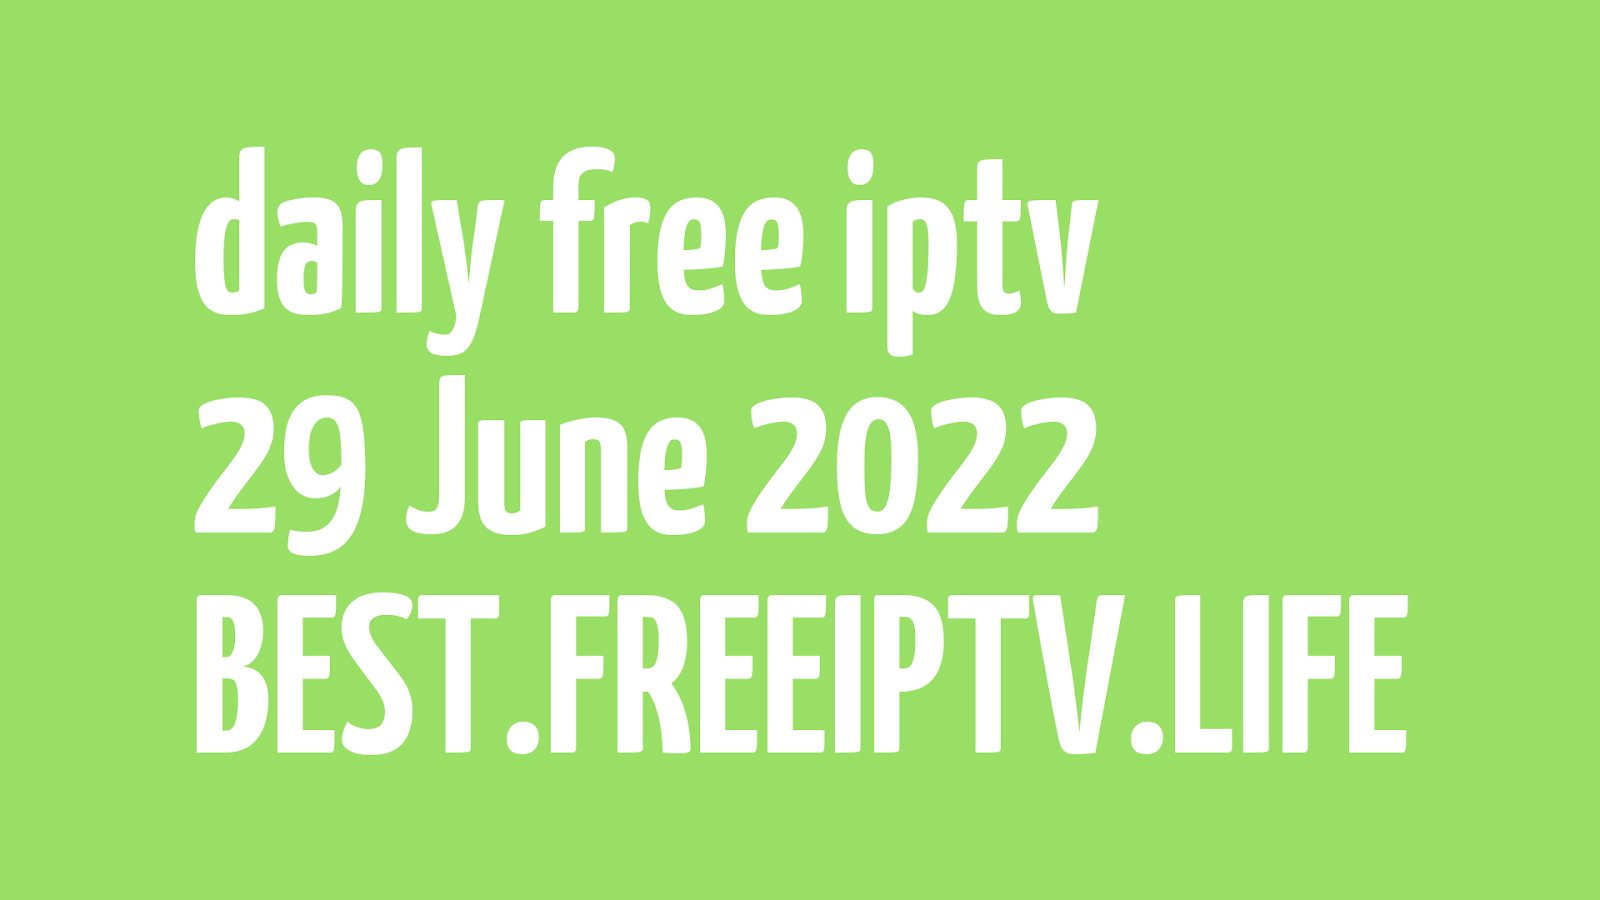 FREE IPTV LINKS DAILY M3U PLAYLISTS (BEST 54 URLS) 29 JUNE 2022